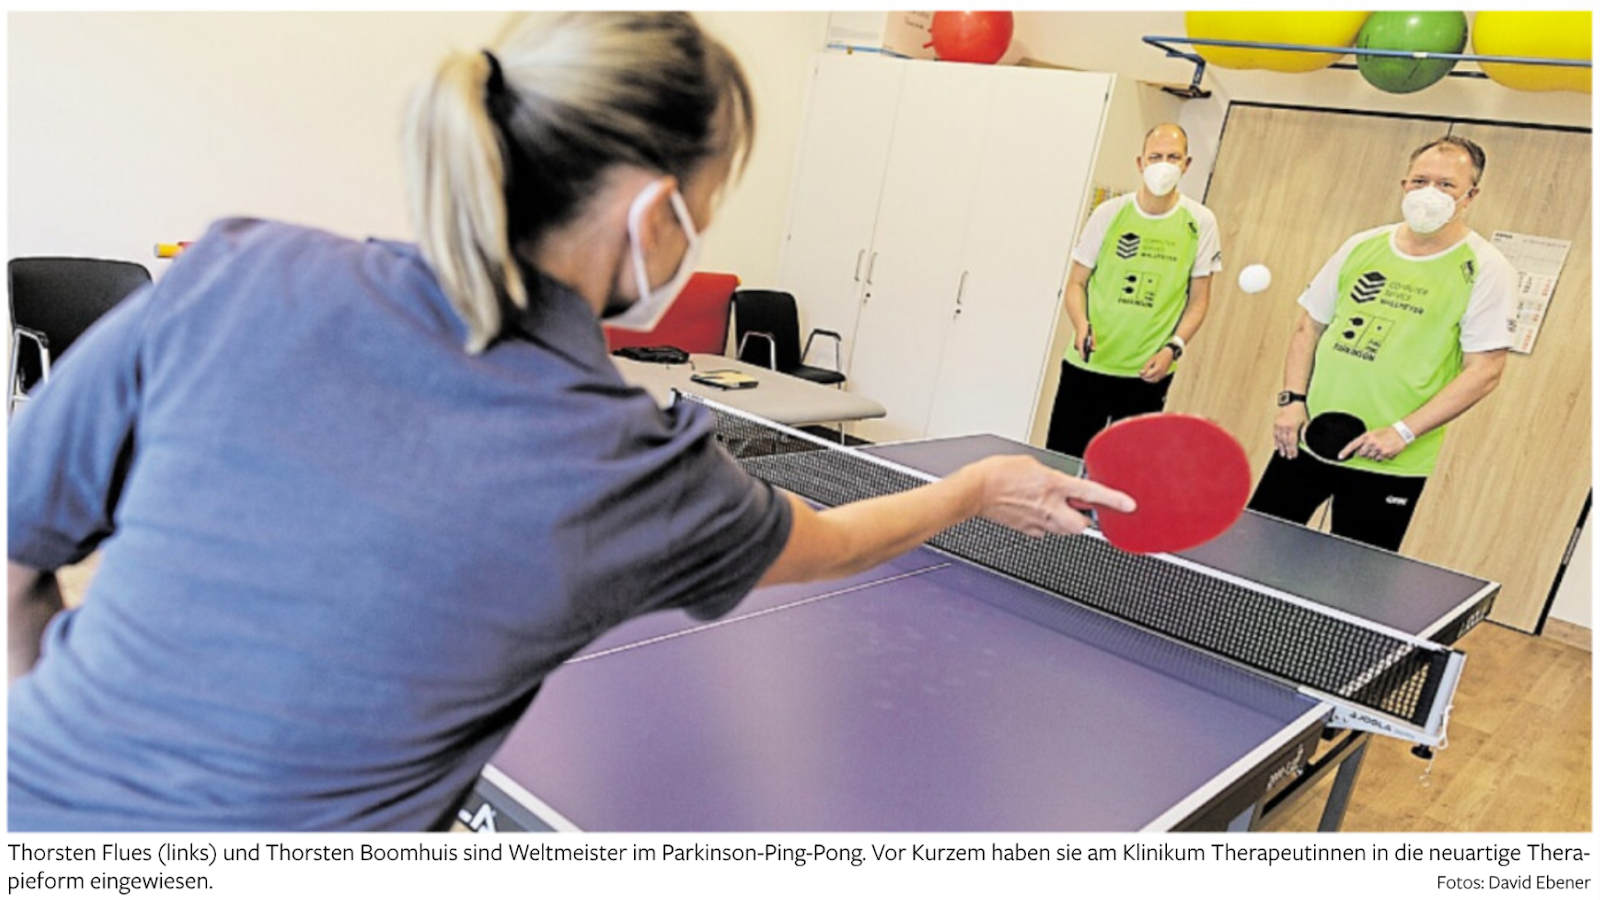 Mit Parkinson-Ping-Pong gegen den Tremor